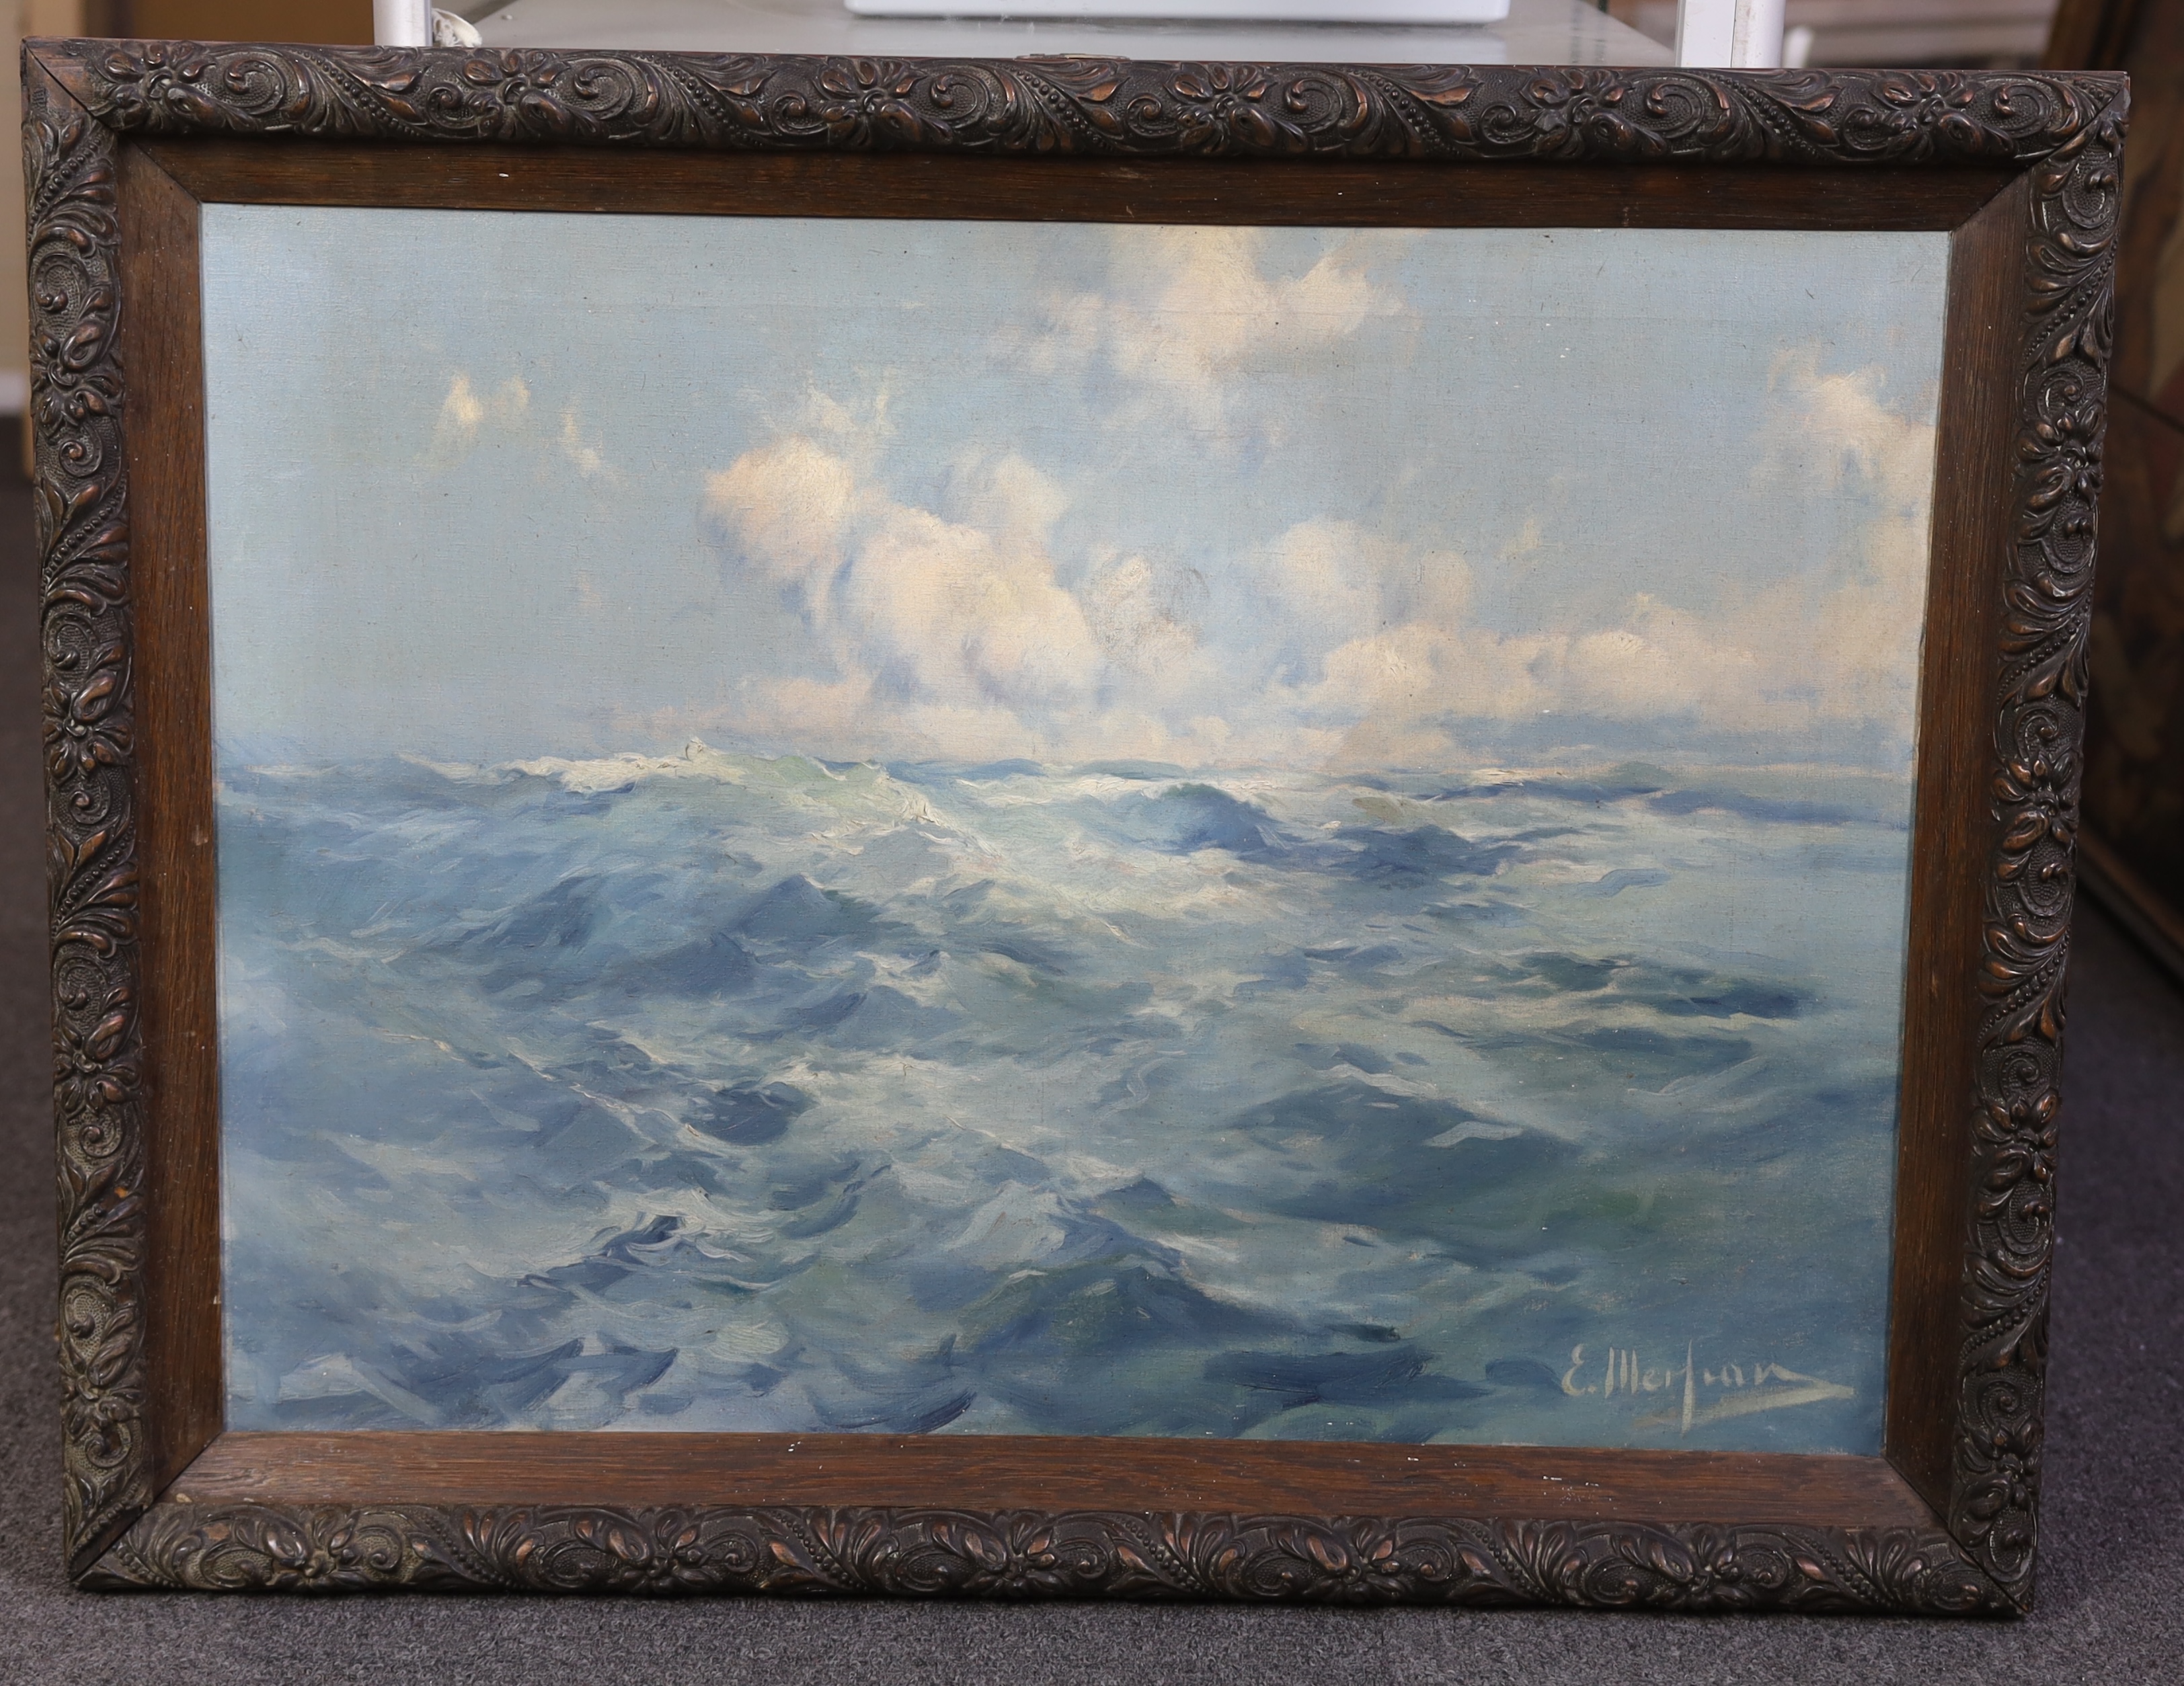 Eliseu Meifrèn i Roig (Spanish, 1859-1940), 'A study of the sea', oil on canvas, 54 x 74cm